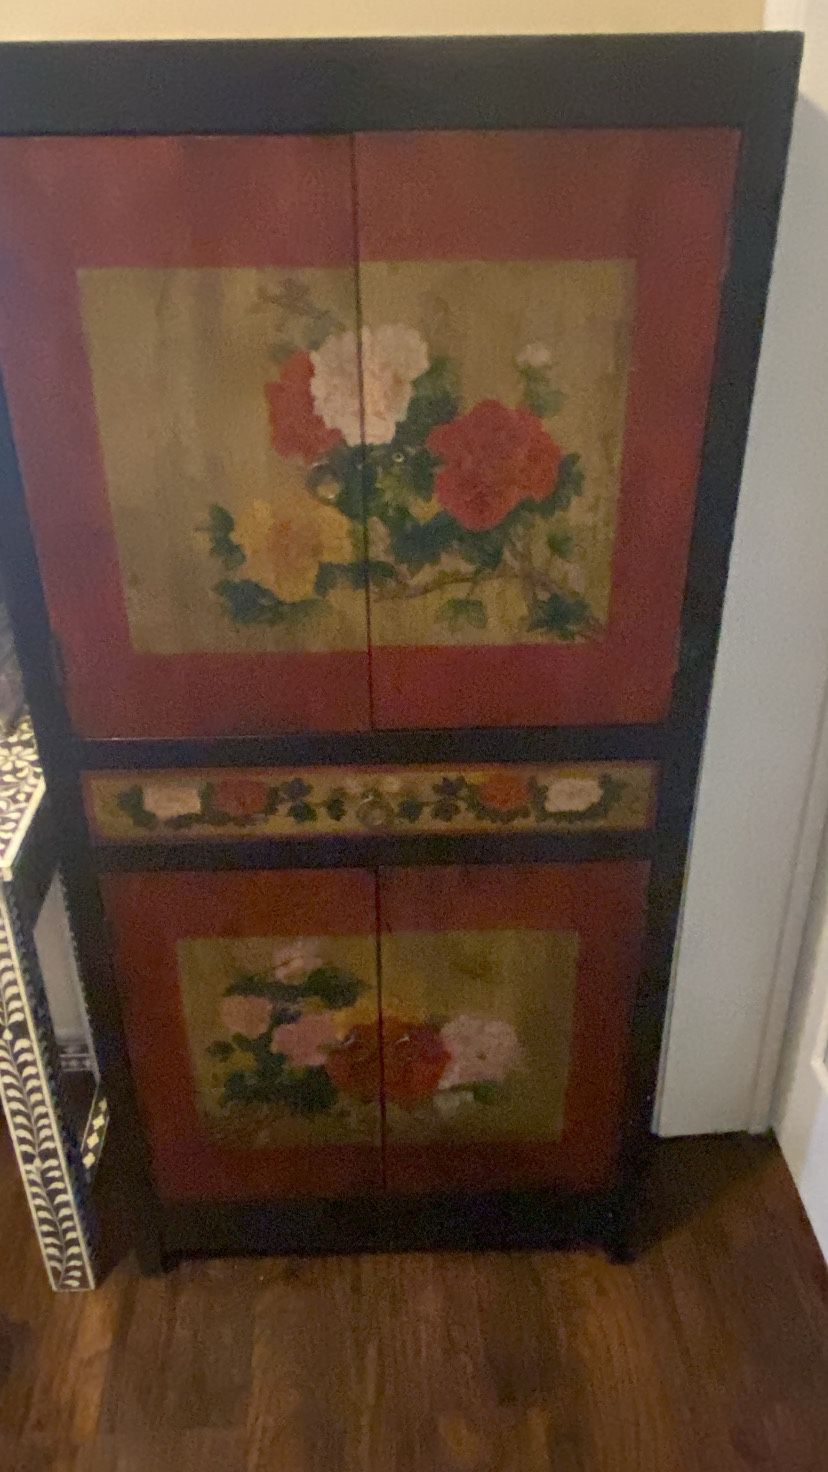 Antique Rose China Cabinet/Wine Rack